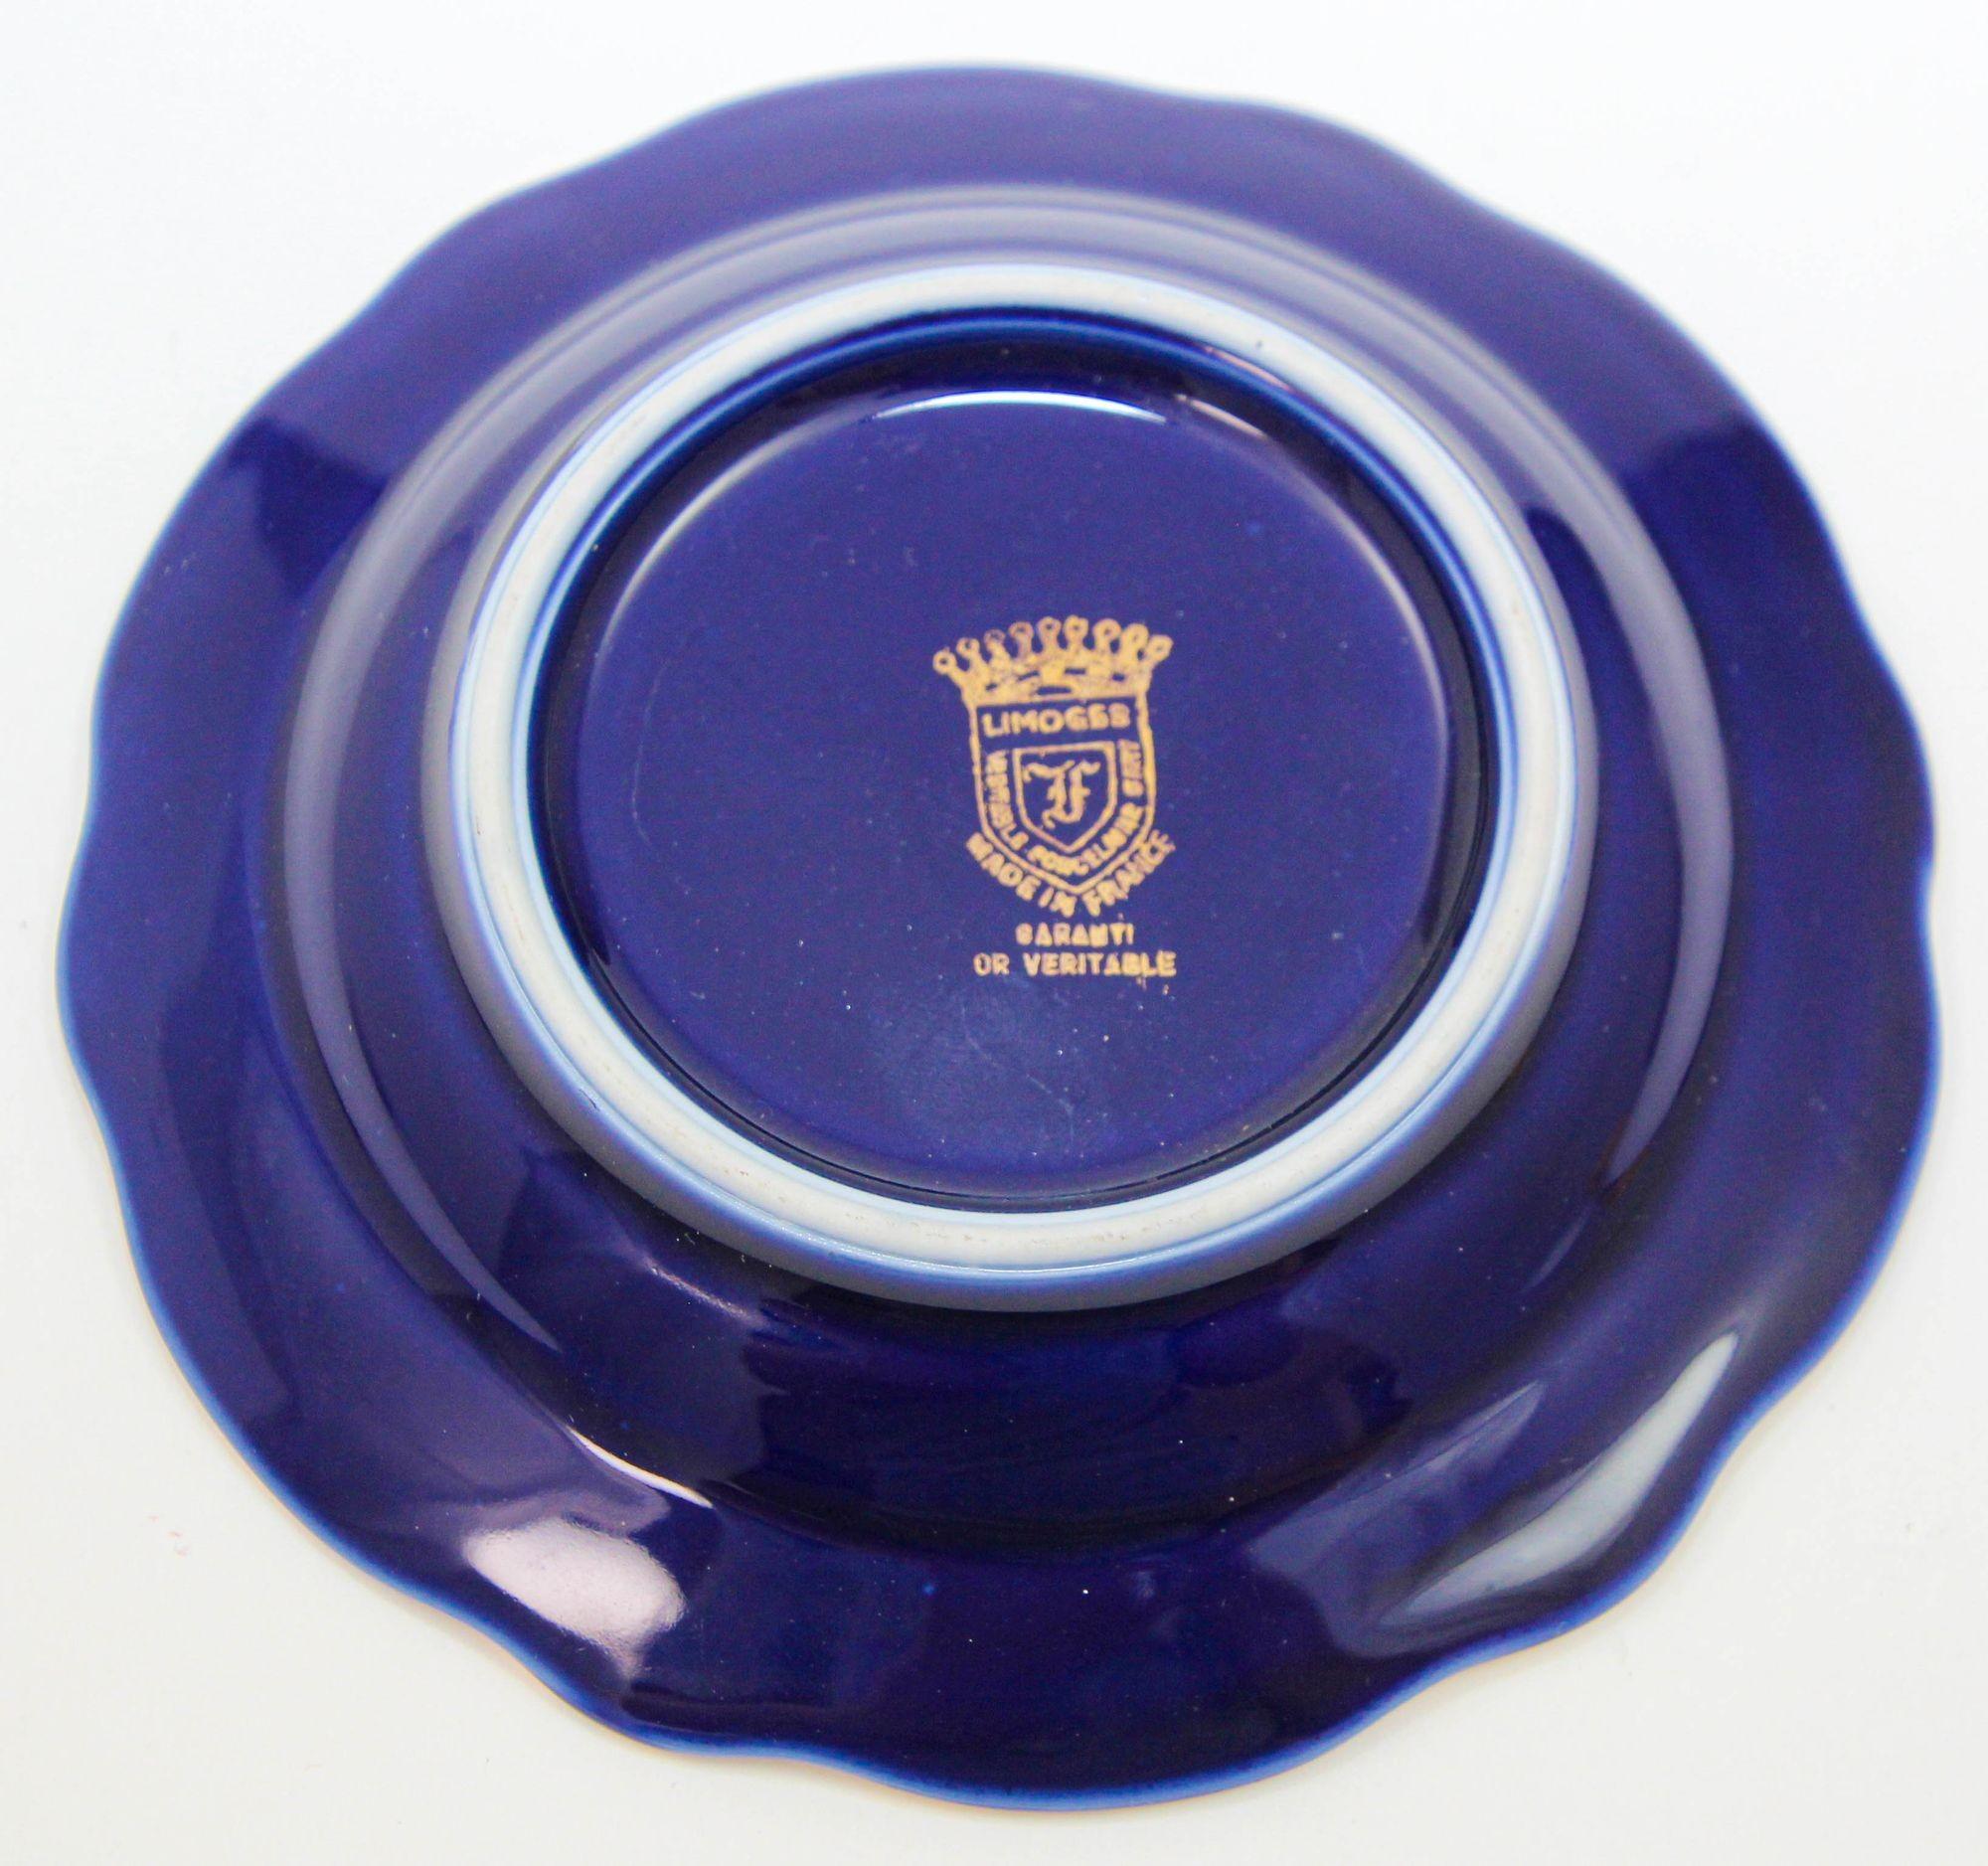 French Limoges France Porcelain Dish Ashtray Souvenir of Paris Cobalt Blue and 24K Gold For Sale